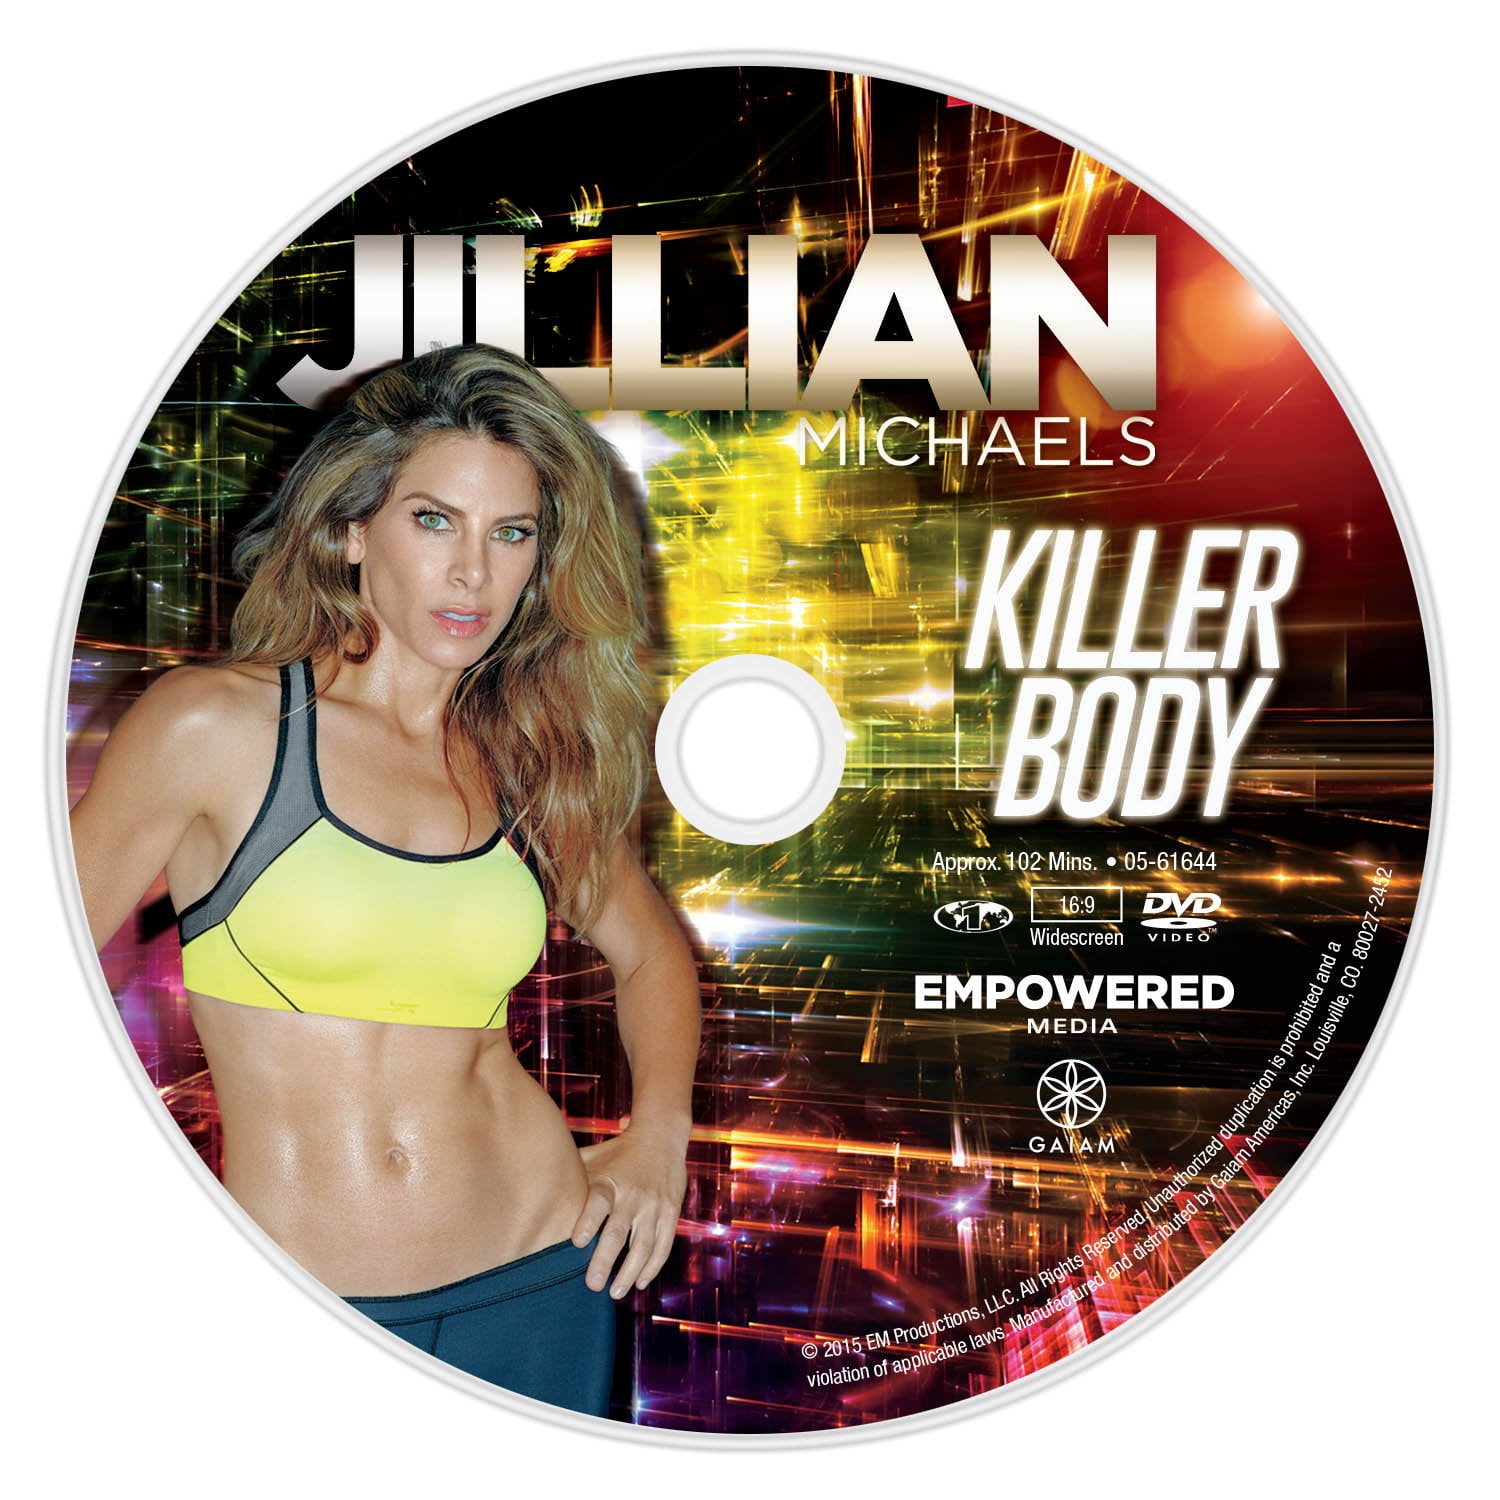 Jillian Michaels NEW Killer Body exercise dvd review -March 2015